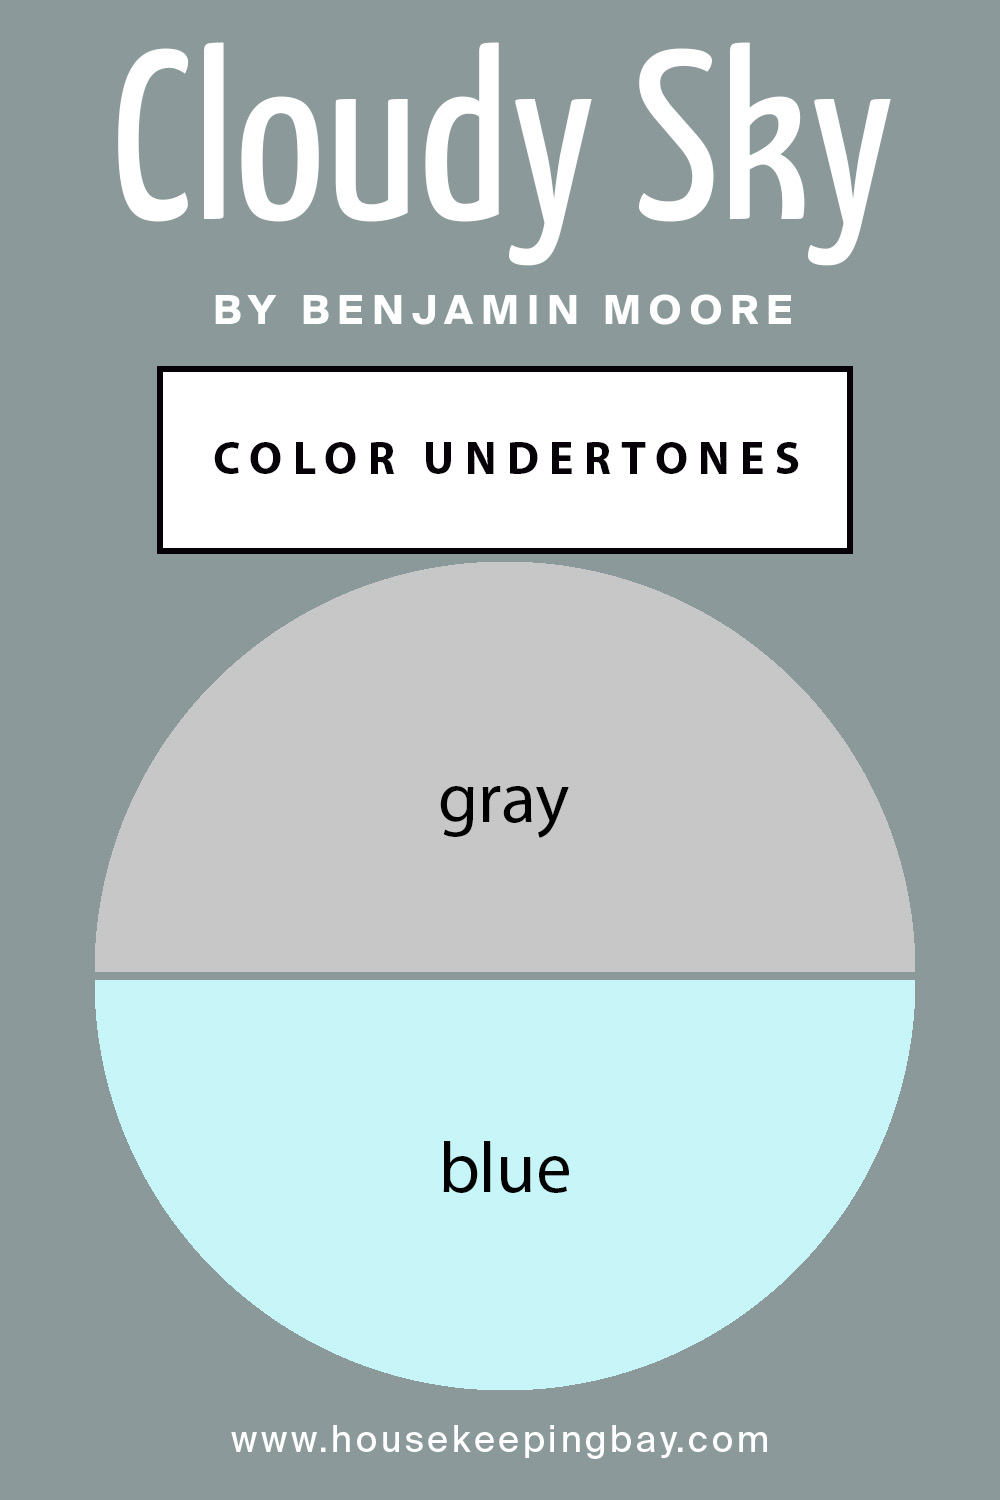 color undertones of cloudy sky 2122-30 by benjamin moore